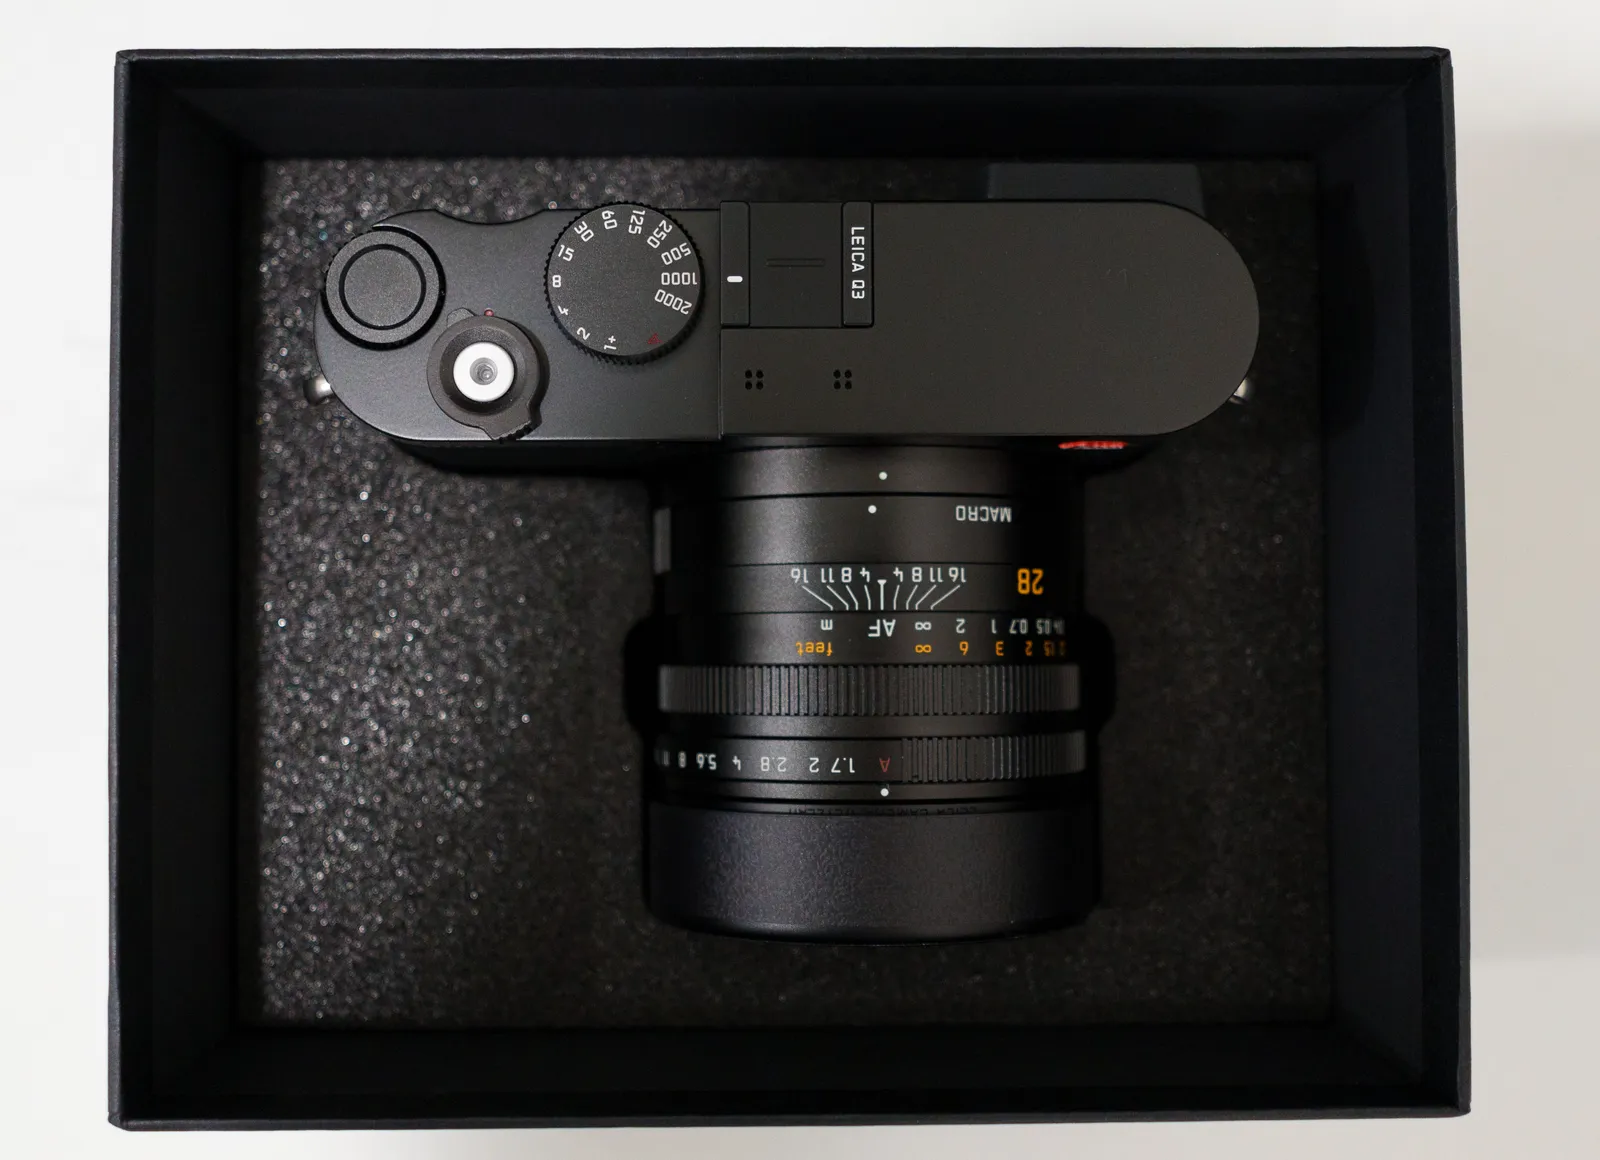 Leica Q3 Compact Digital Camera - 60MP Full-Frame 28mm f/1.7 Lens